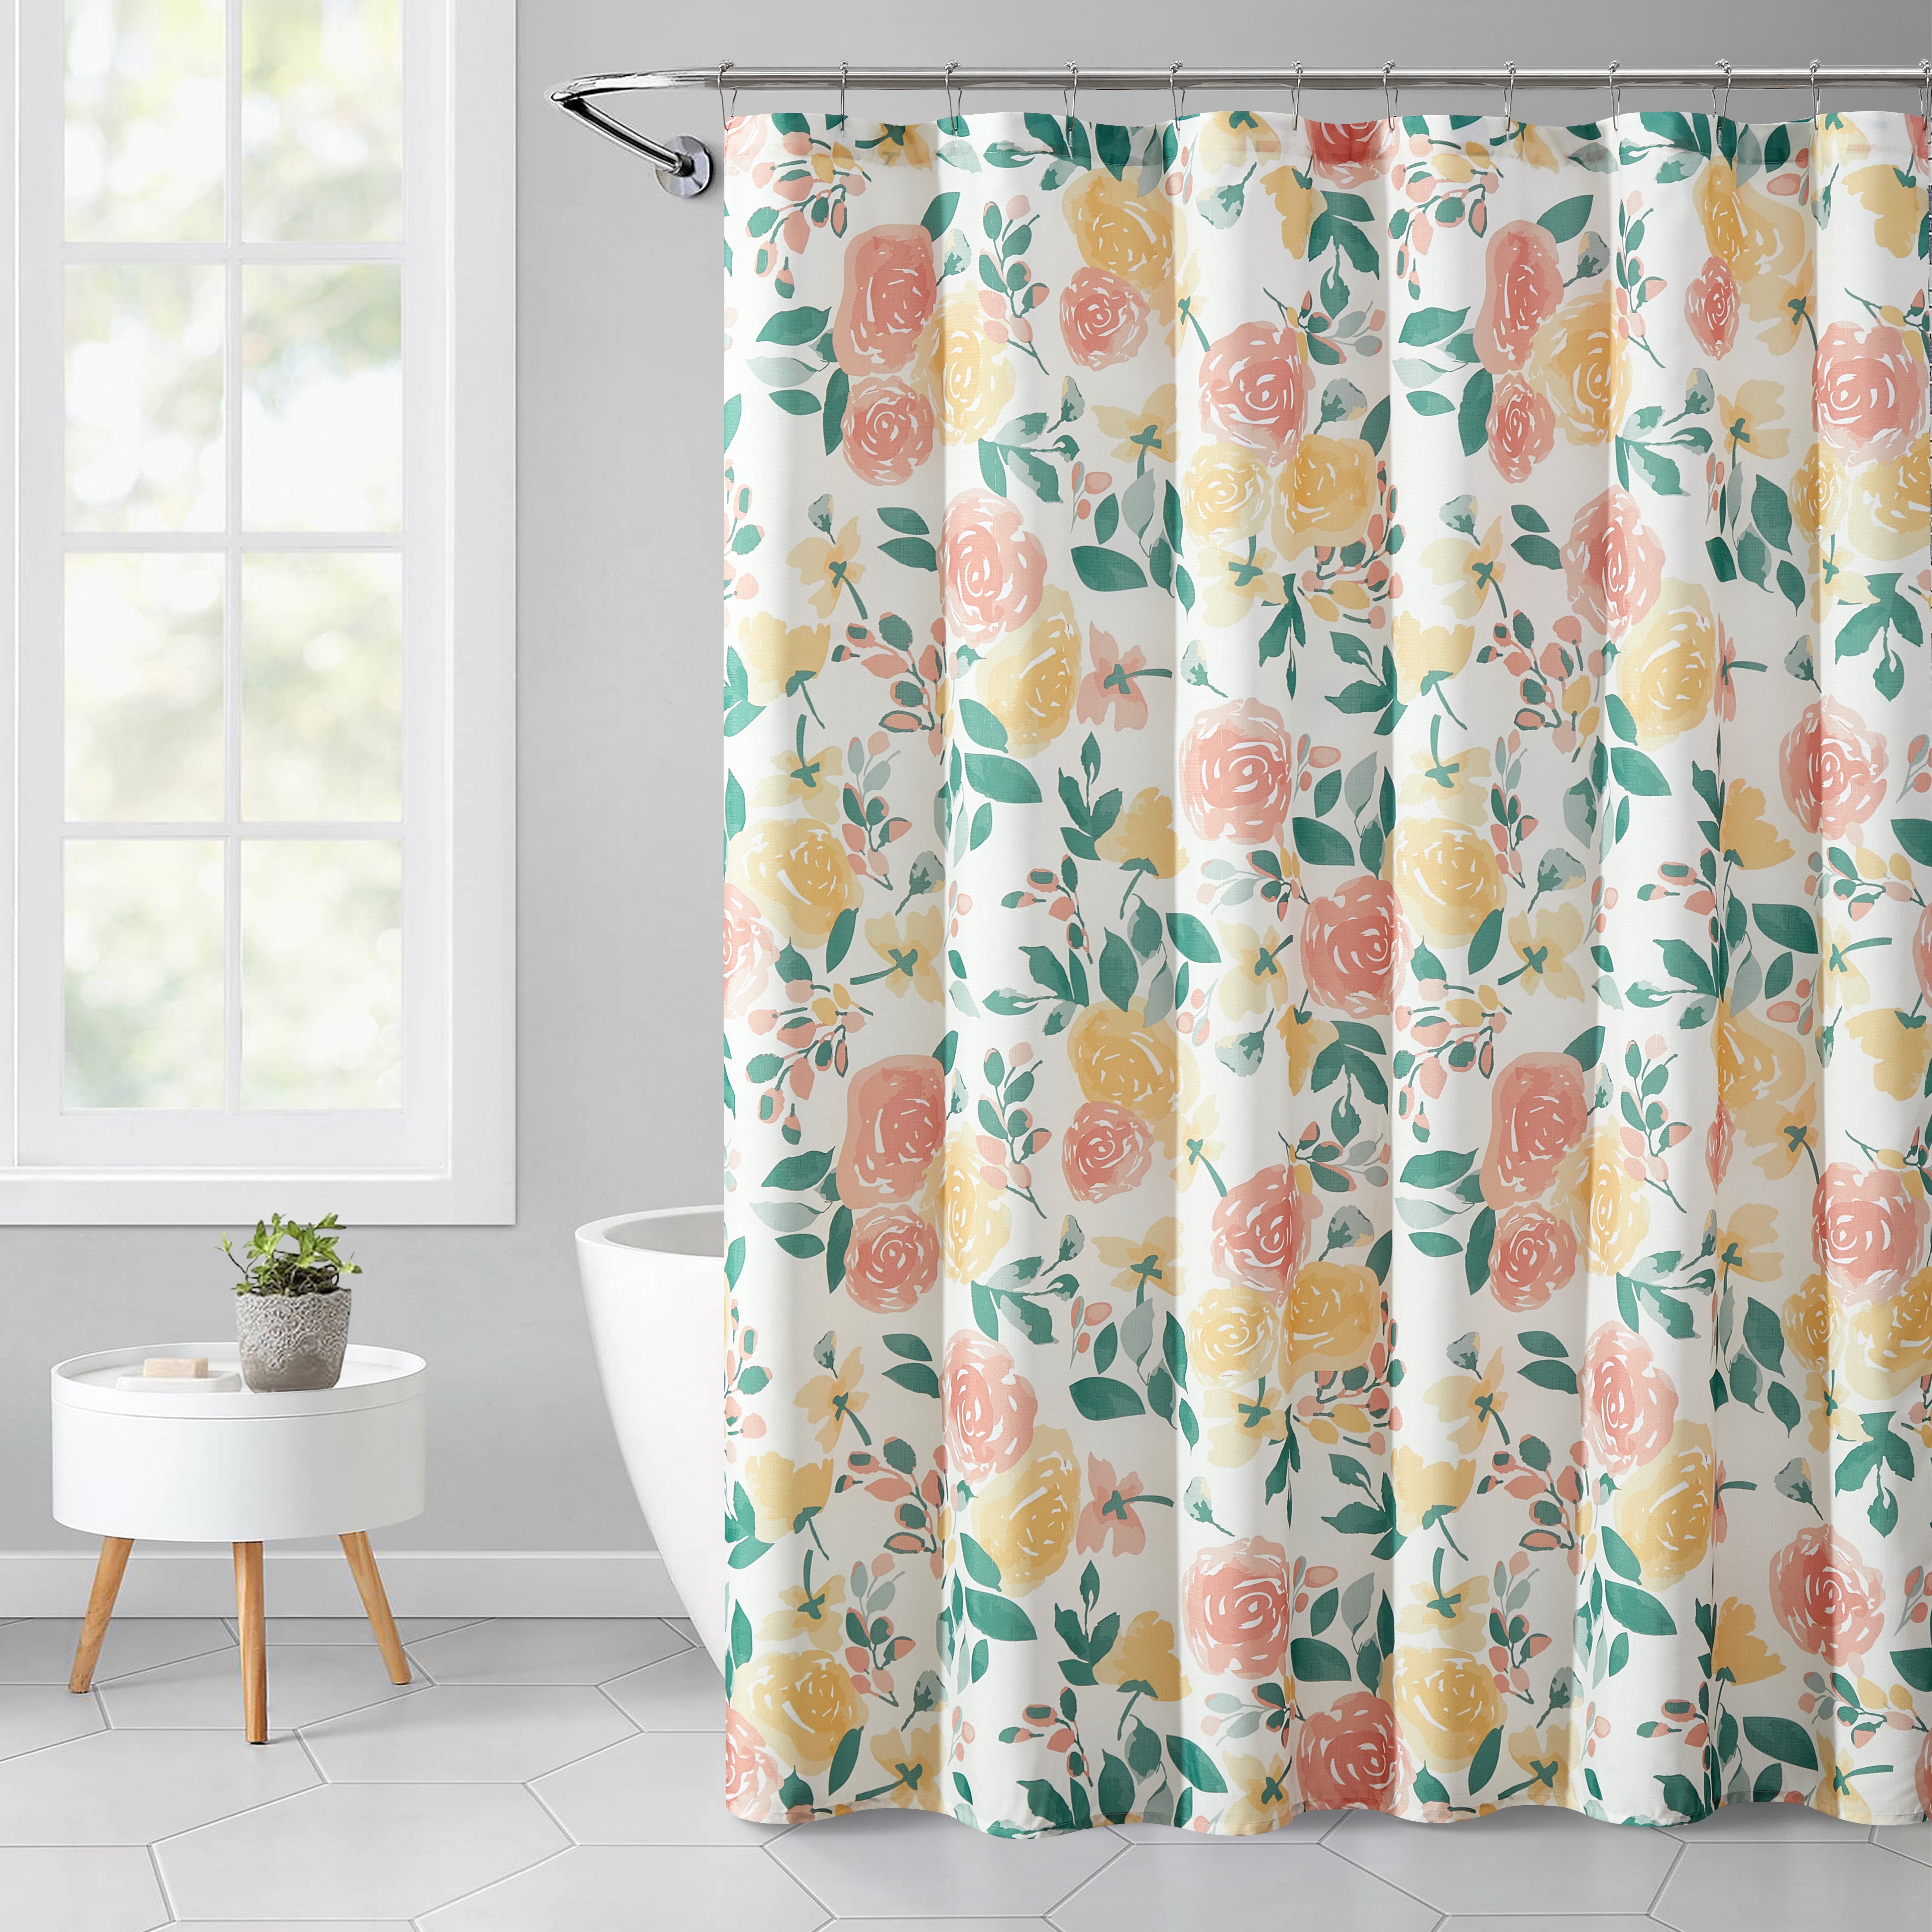 Brand New Unicorn Horse Flower Shower Curtain 60 x 72 Inch 